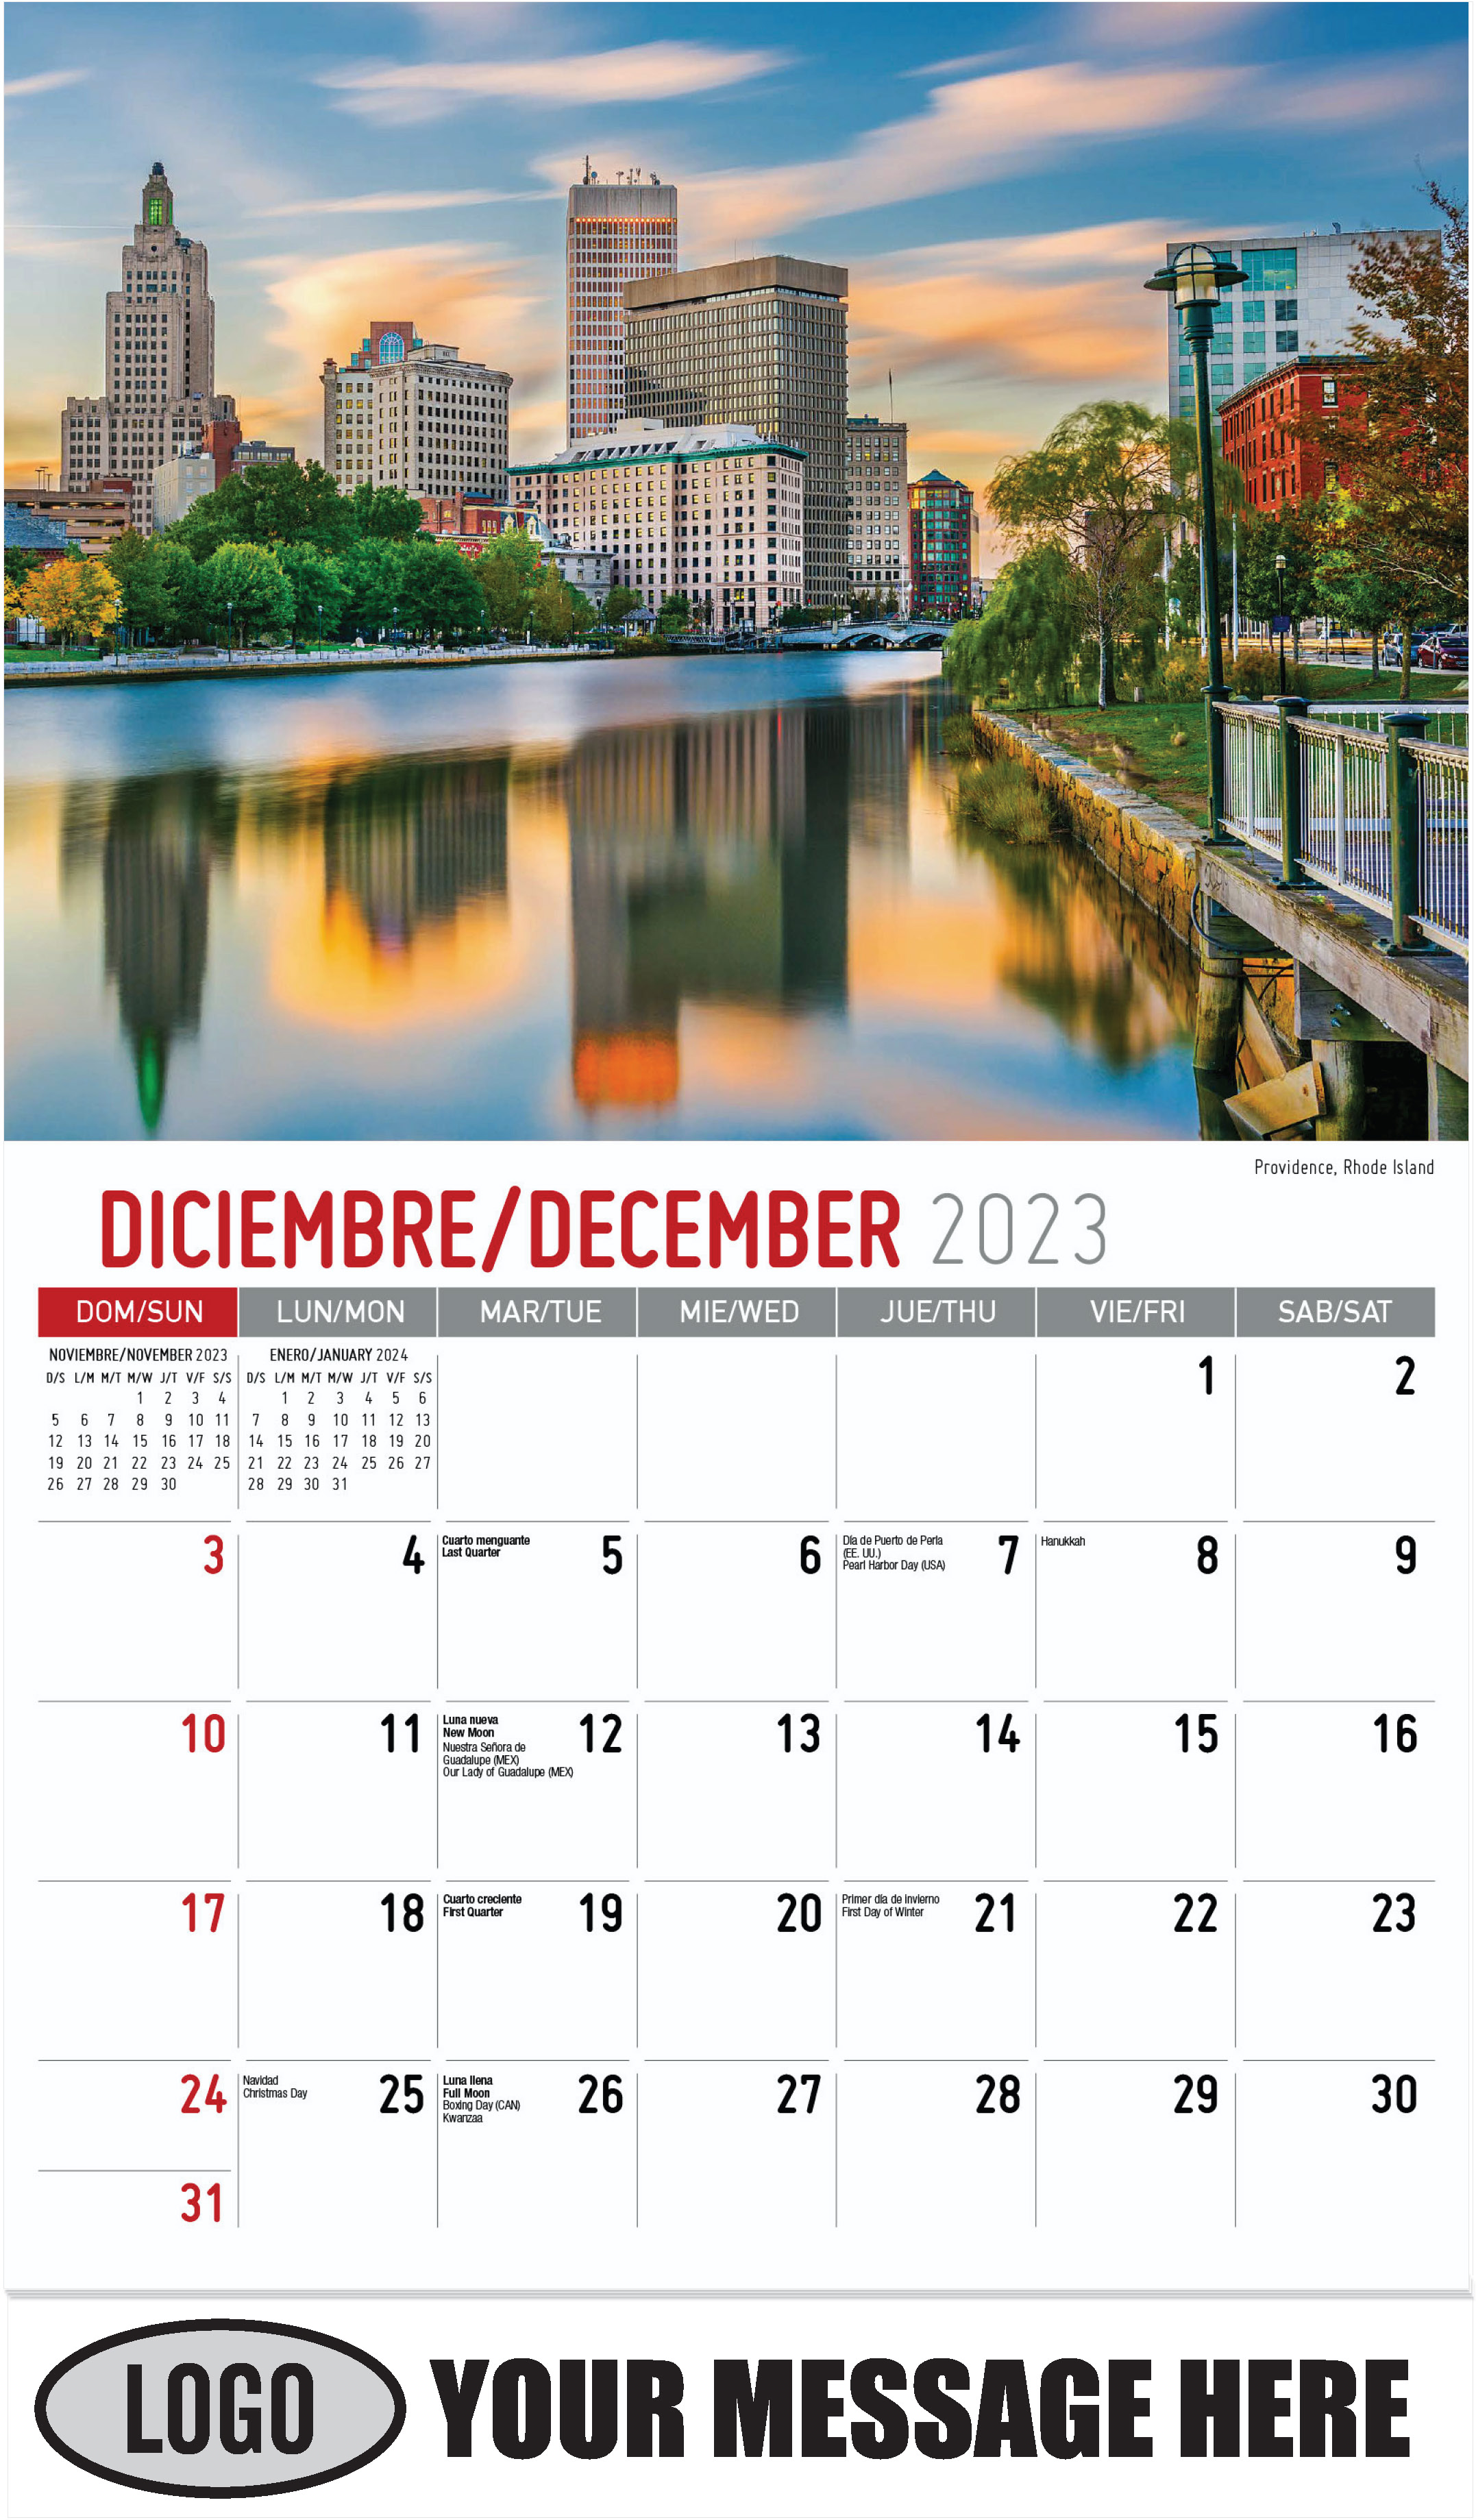 Providence, Rhode Island - December 2023 - Scenes of America (Spanish-English bilingual) 2023 Promotional Calendar